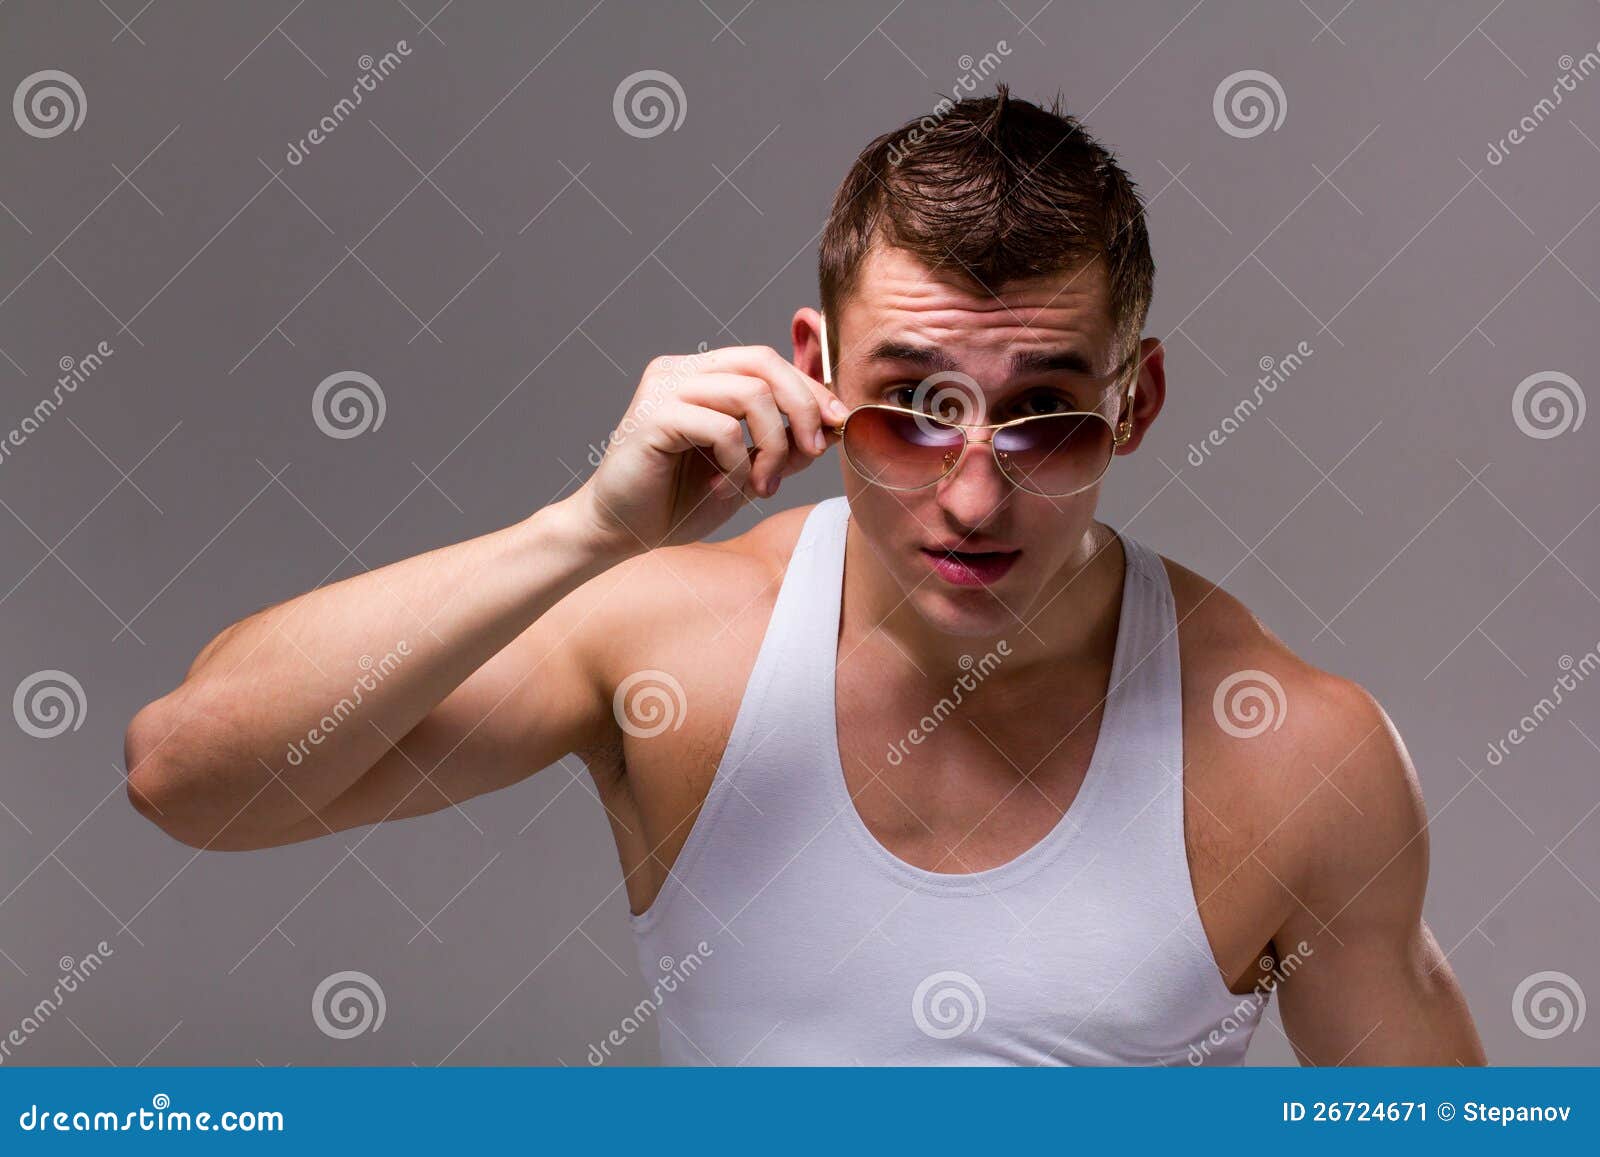 Surprised Man Wearing Black Sunglasses Stock Image - Image of body ...